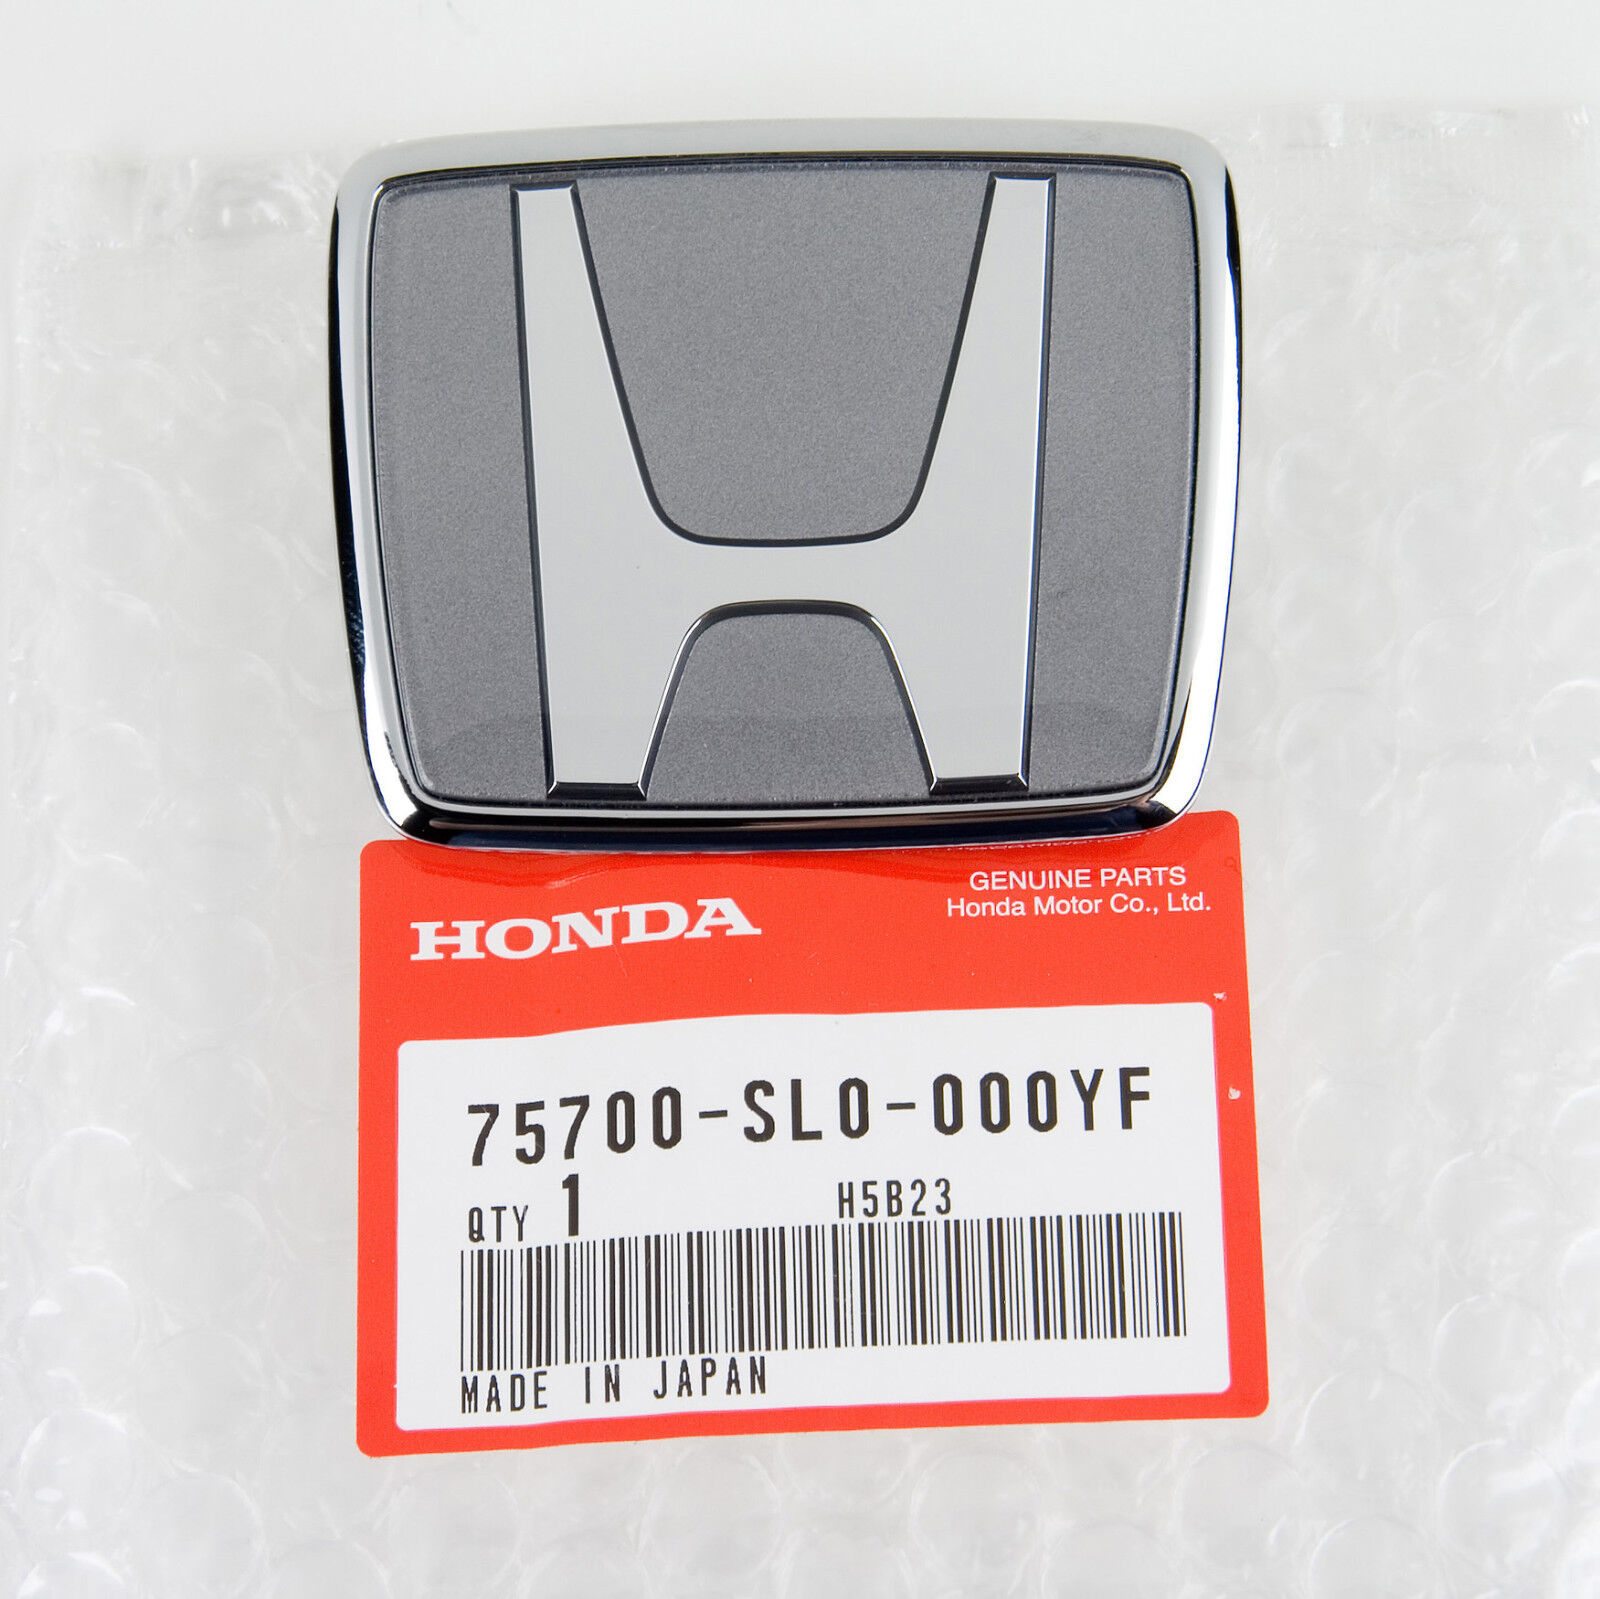 NEW Authentic JDM Honda NSX R77 91-01 Front Emblem 75700-SL0-000YF Silver/Gray